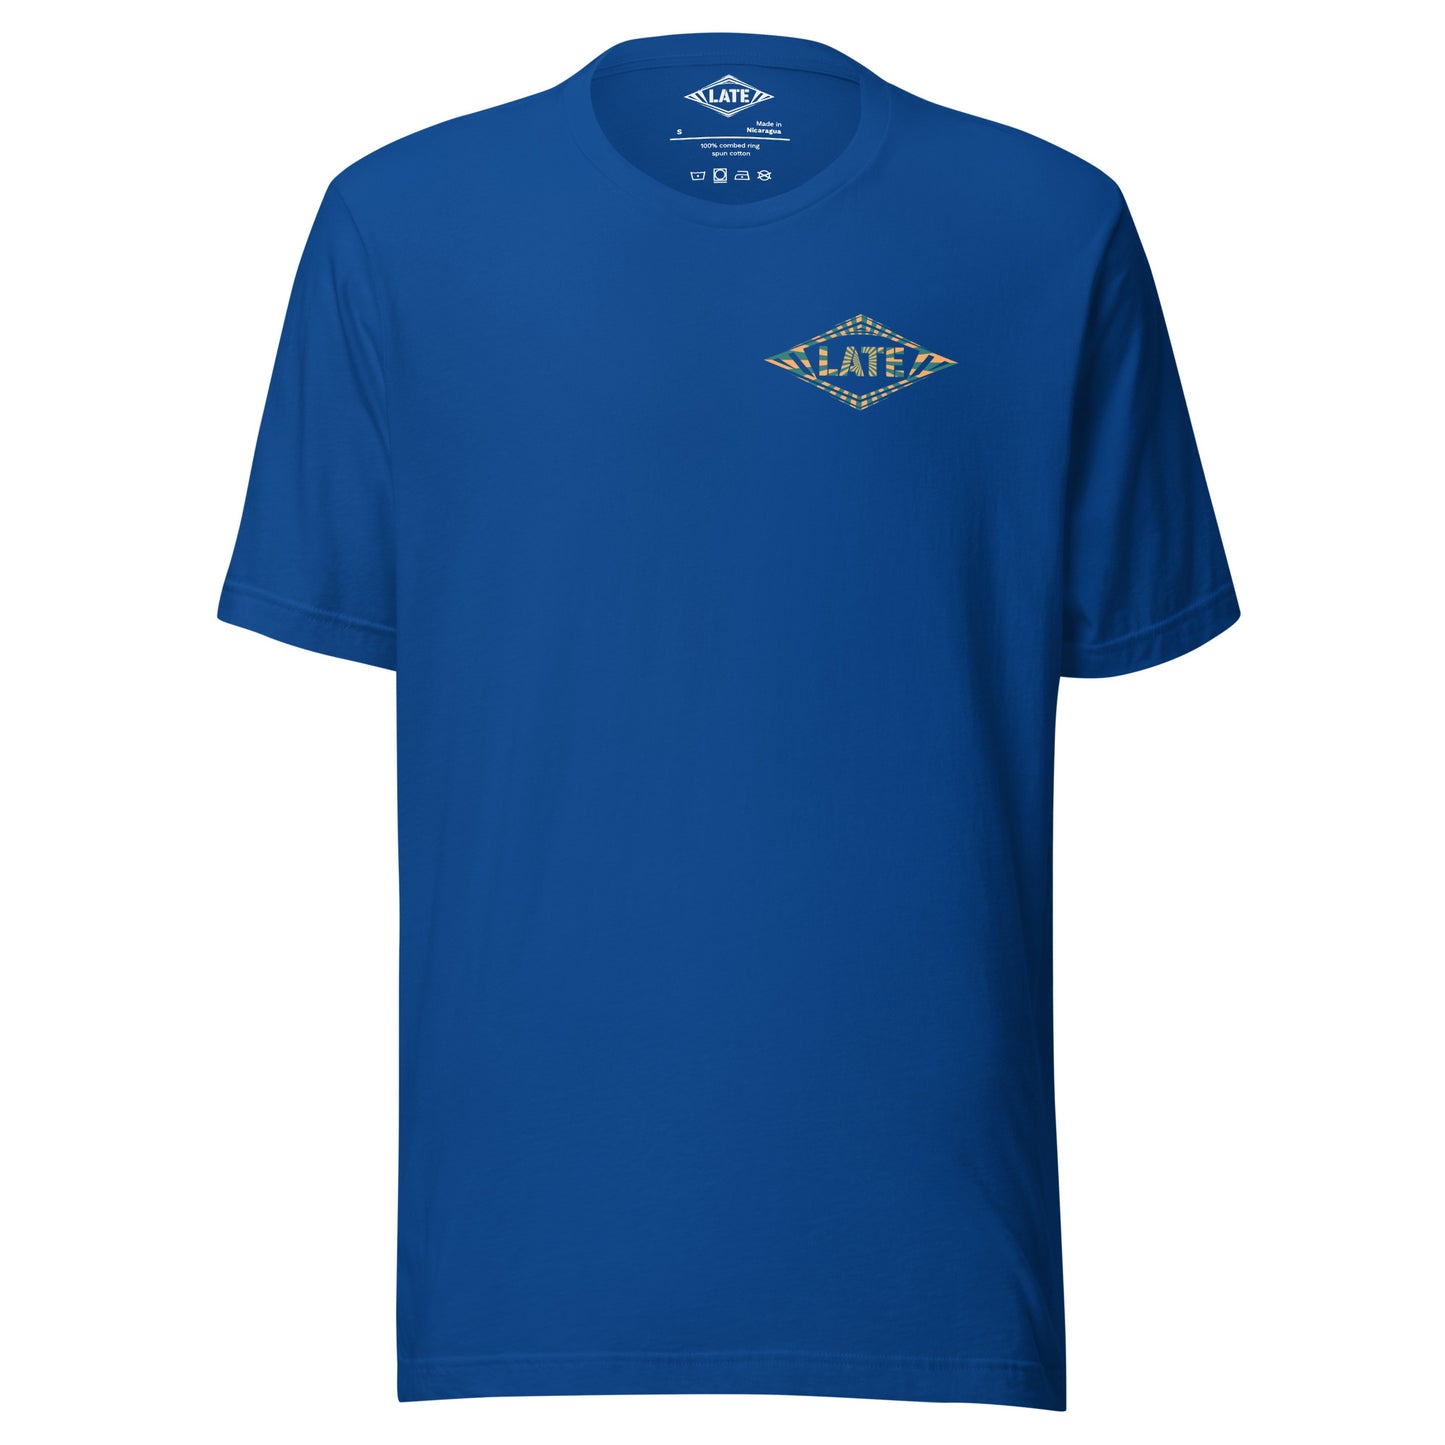 T-Shirt Walk Of Life logo Late surfing design old school hippie tshirt couleur bleu royal